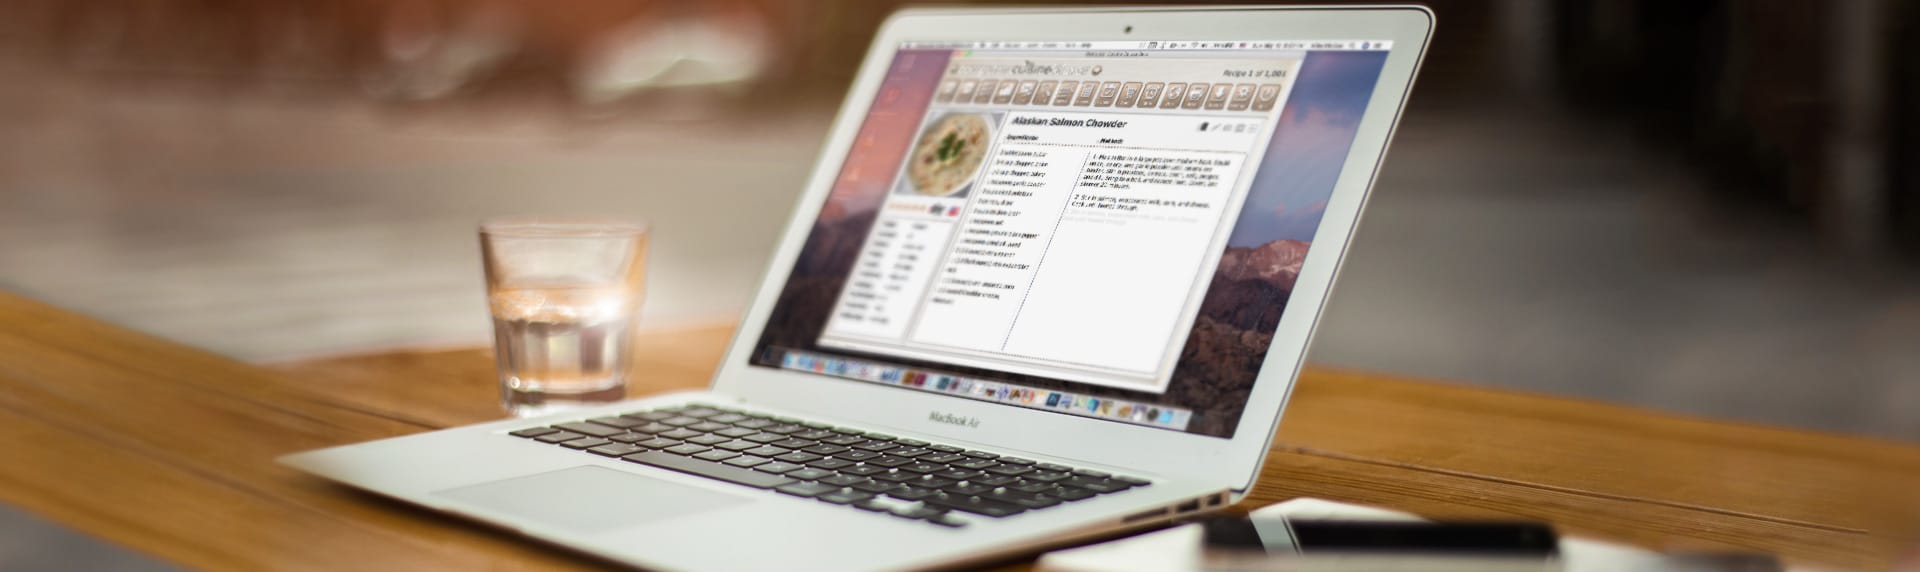 computer cuisine laptop mac recipe software version 9 MacBook Pro macOS